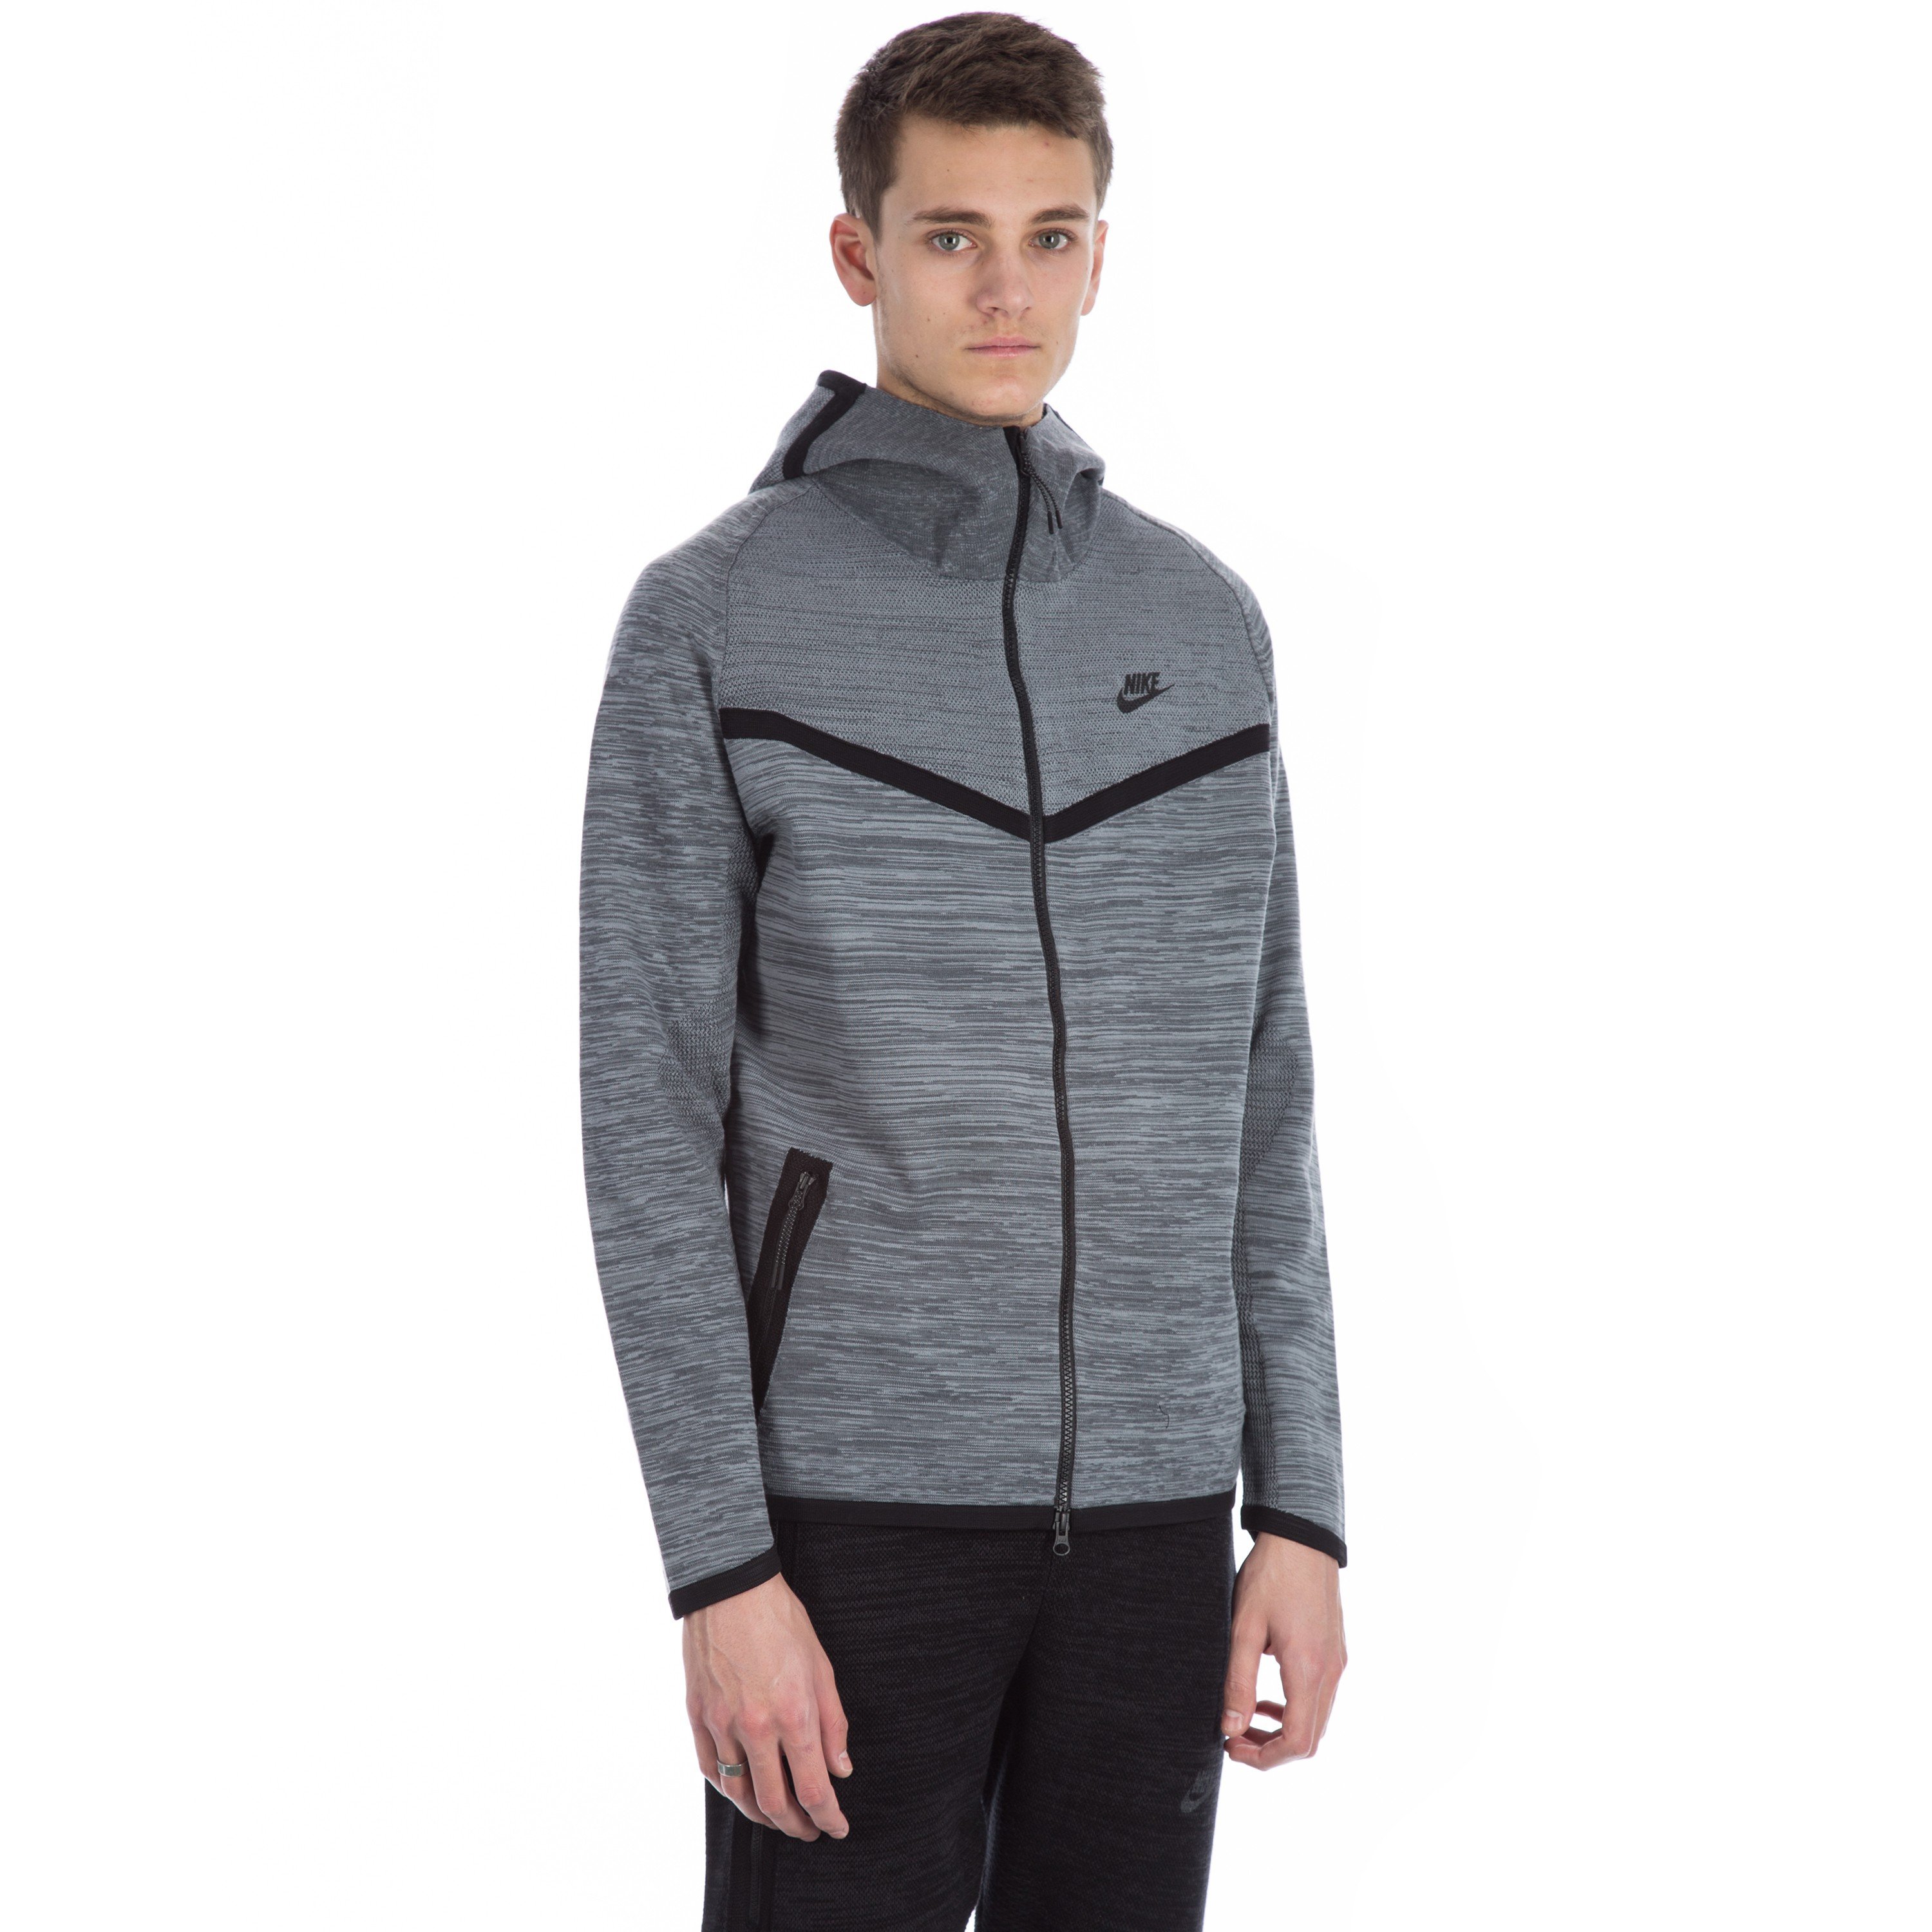 Nike Tech Knit Windrunner Jacket (Cool Grey/Dark Grey/Black) - Consortium.